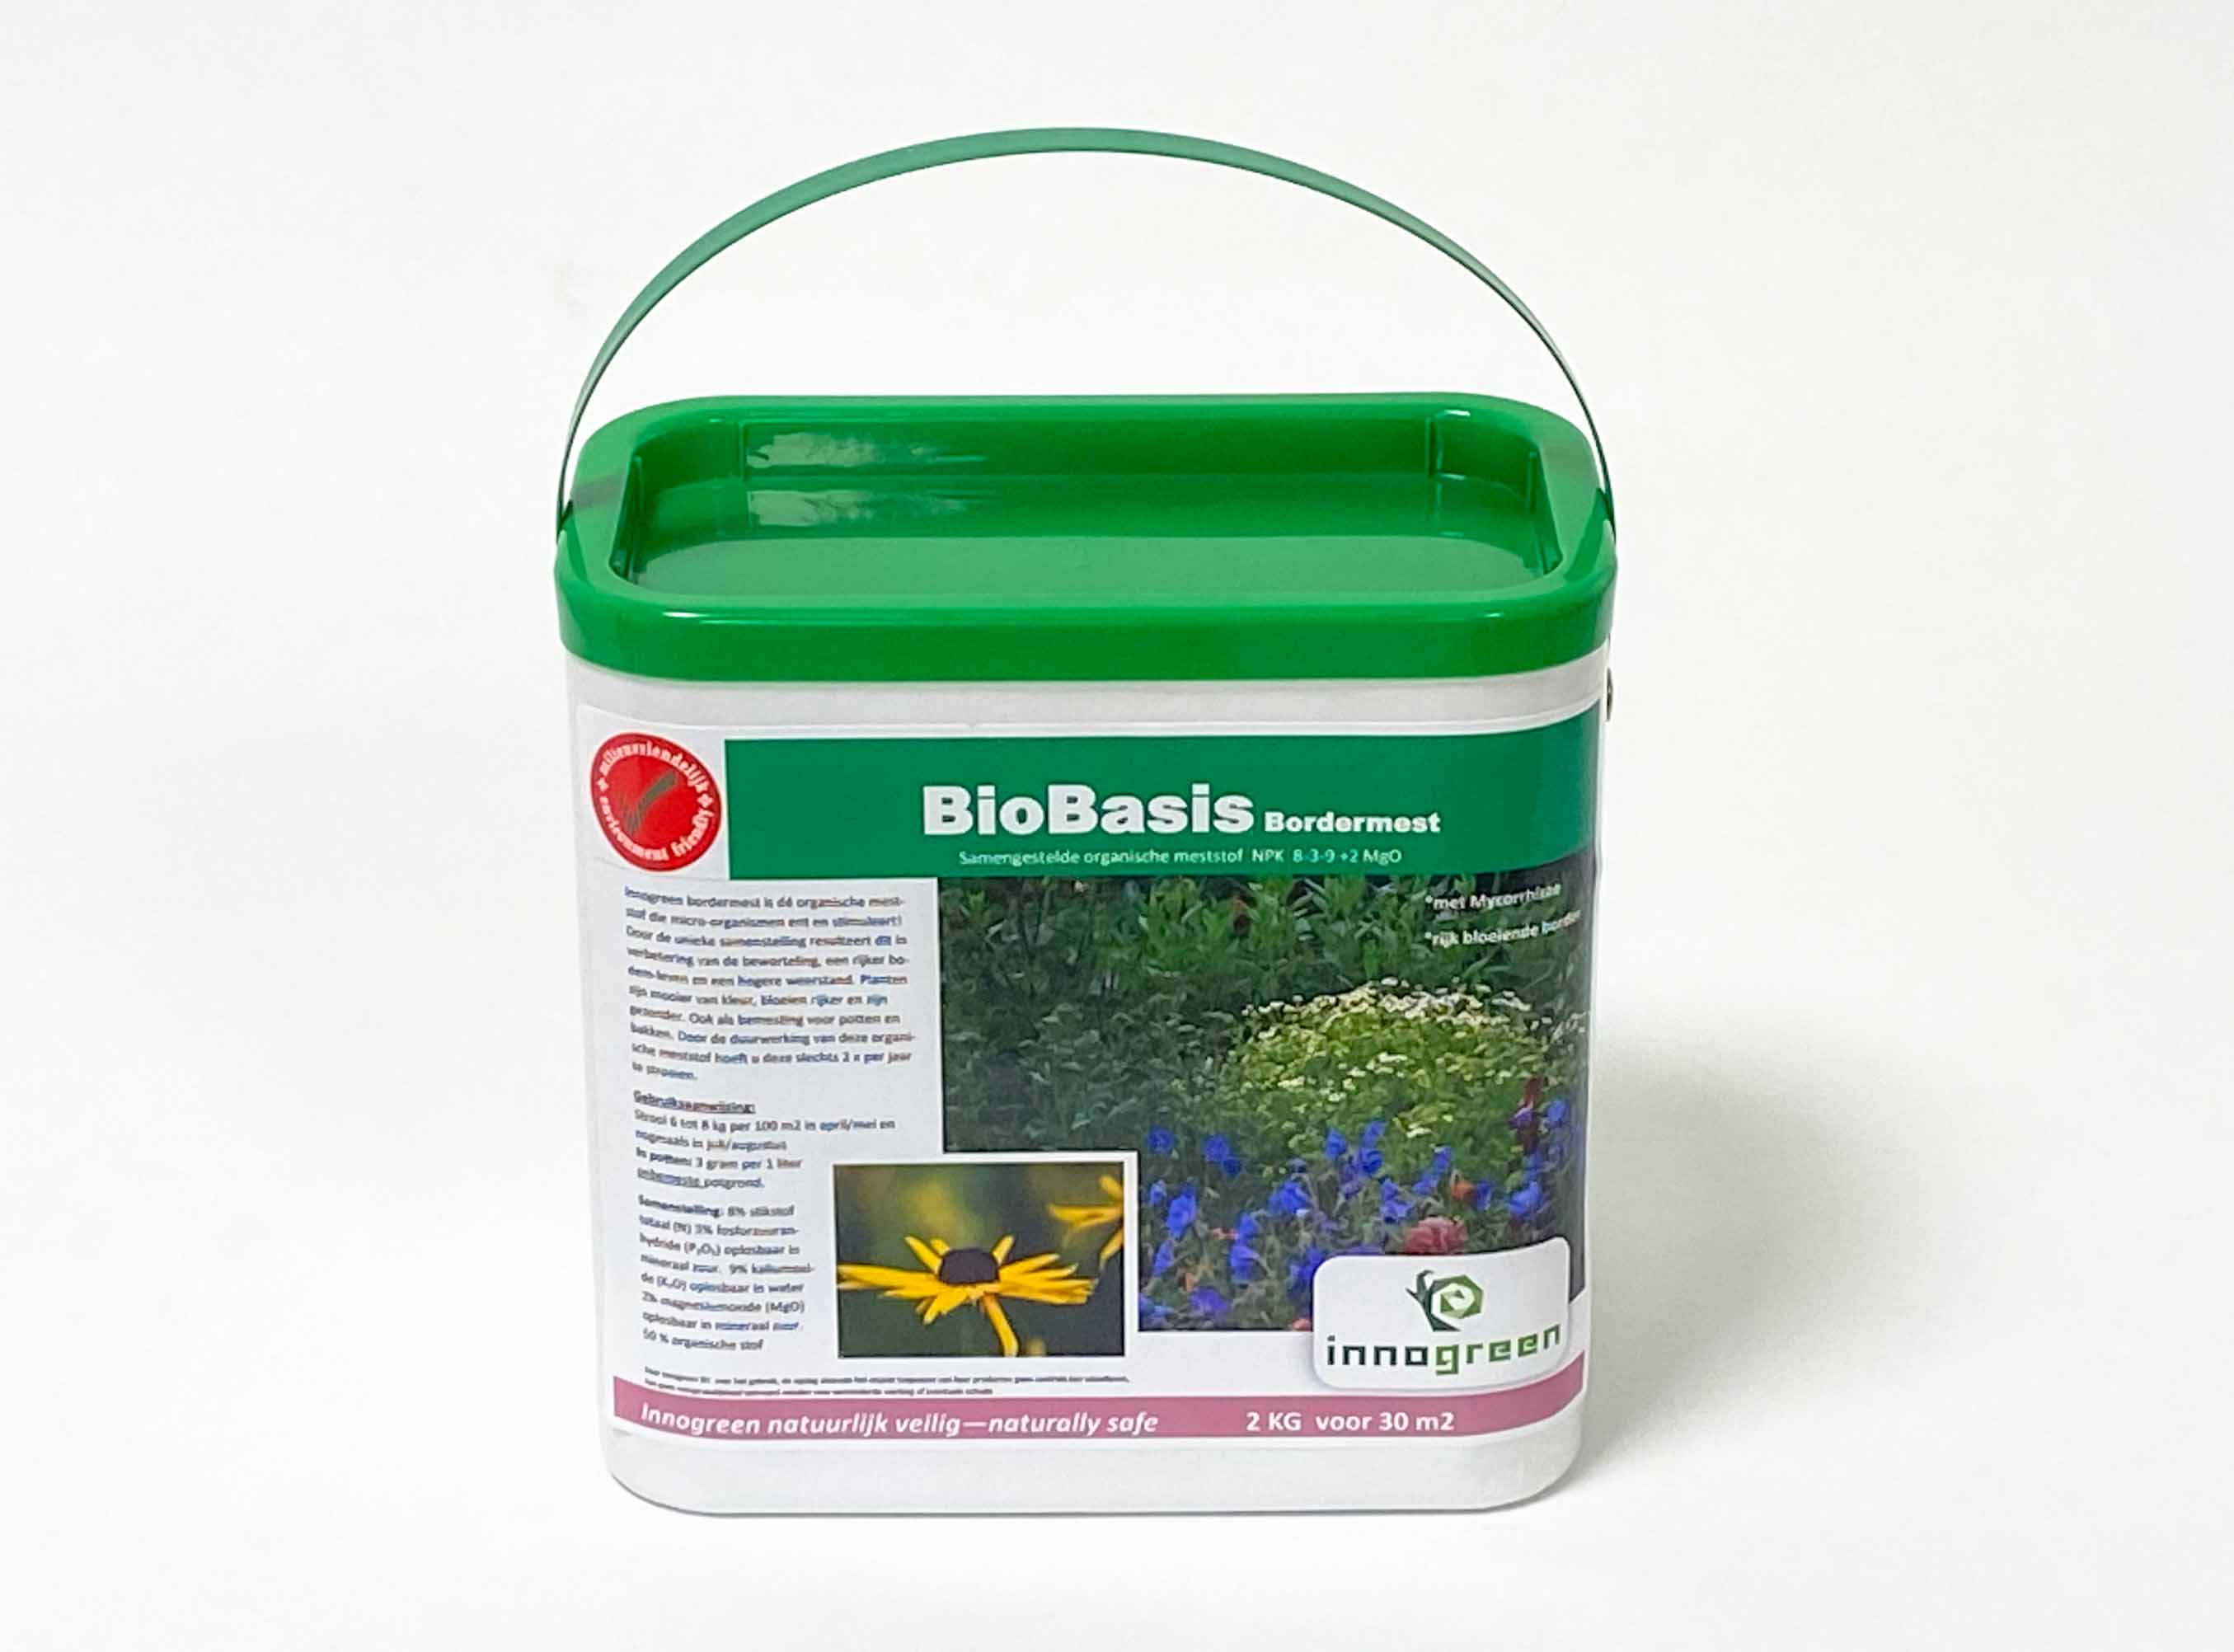 Innogreen BioBasis Bordermest 2 kg